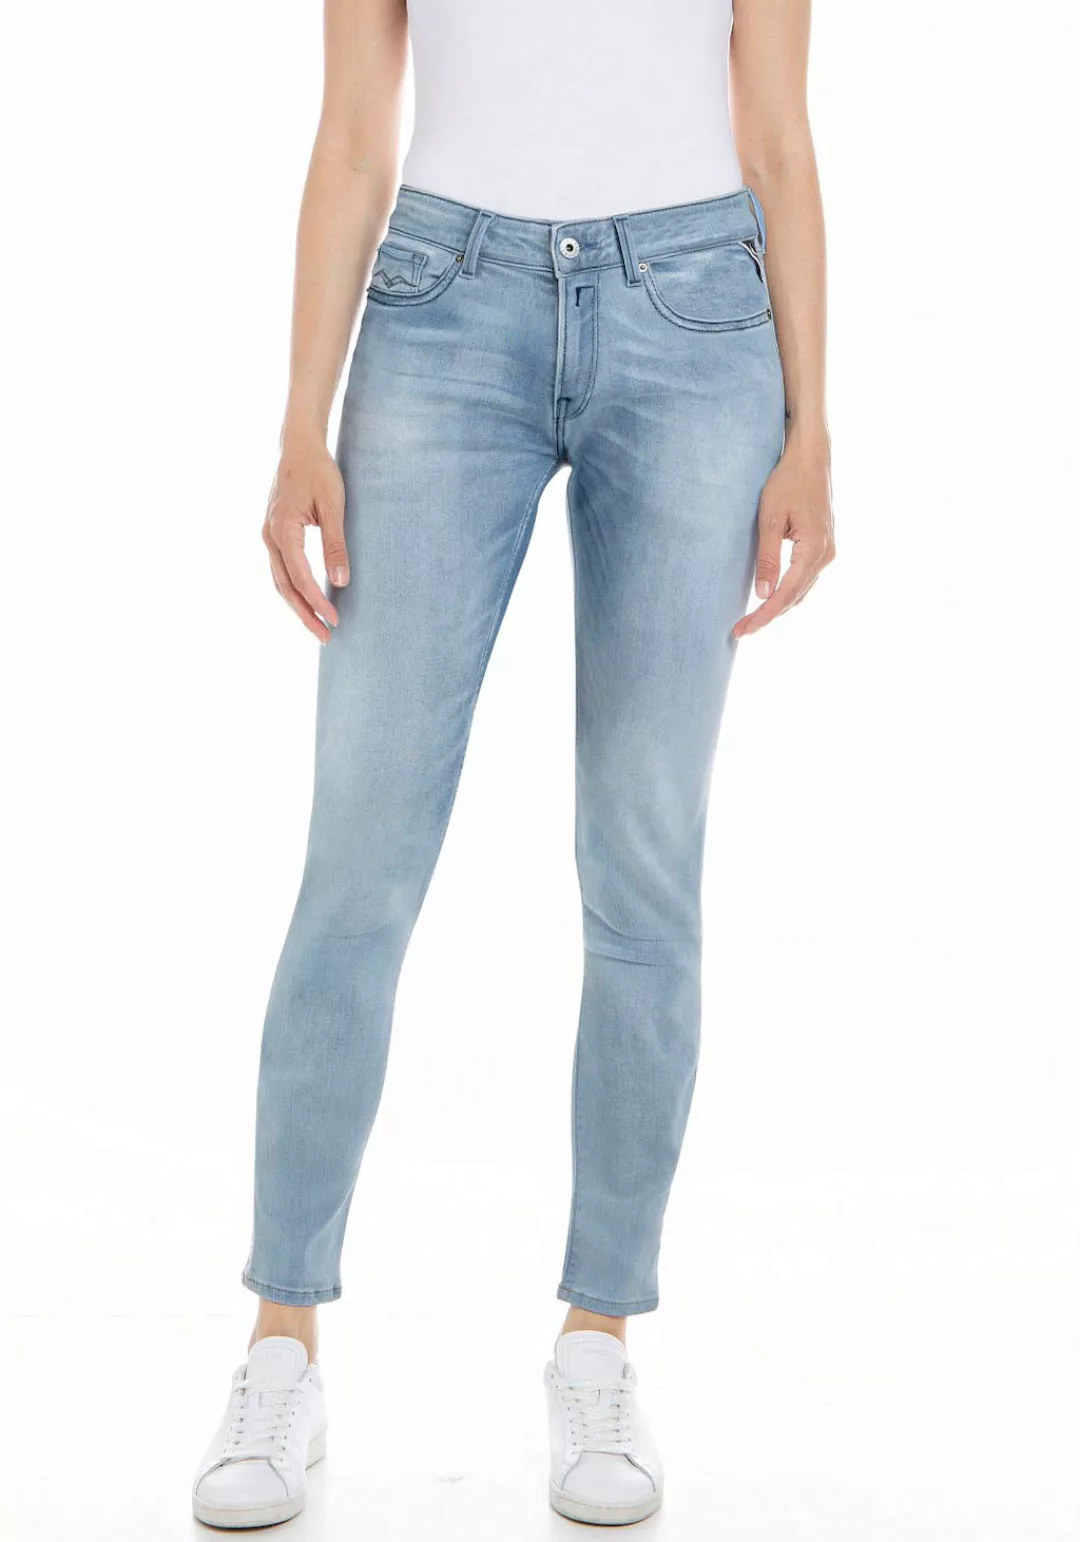 Replay Damen Jeans Jeanshose NEW LUZ - Skinny Fit Blau Light Blue Denim günstig online kaufen